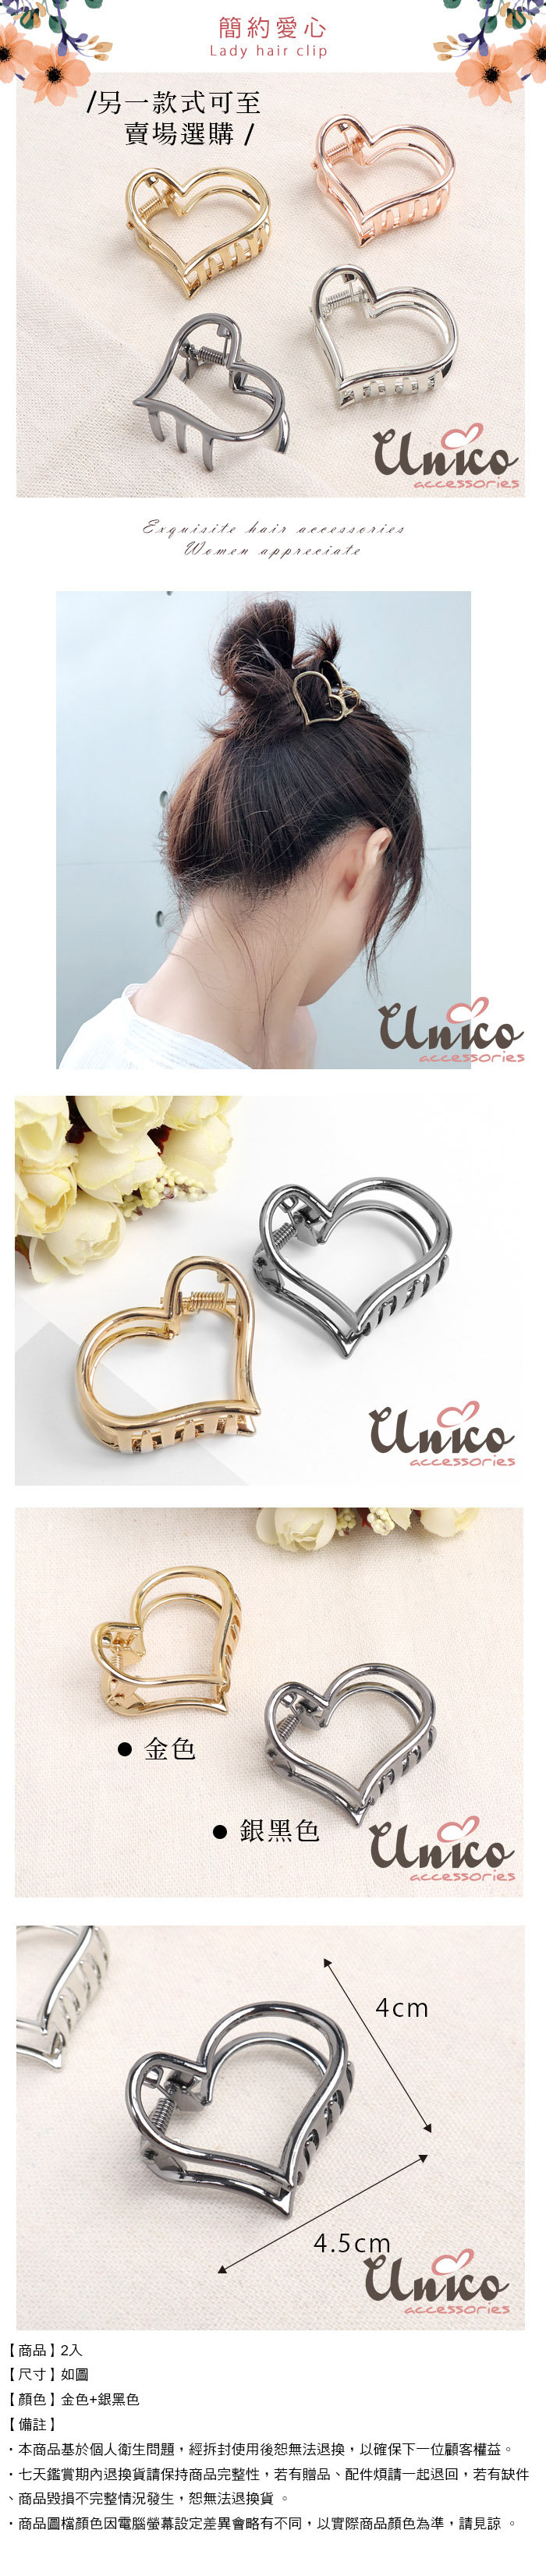 UNICO 簡約時尚質感金屬小號盤髮夾/髮飾-2入(金+銀黑)